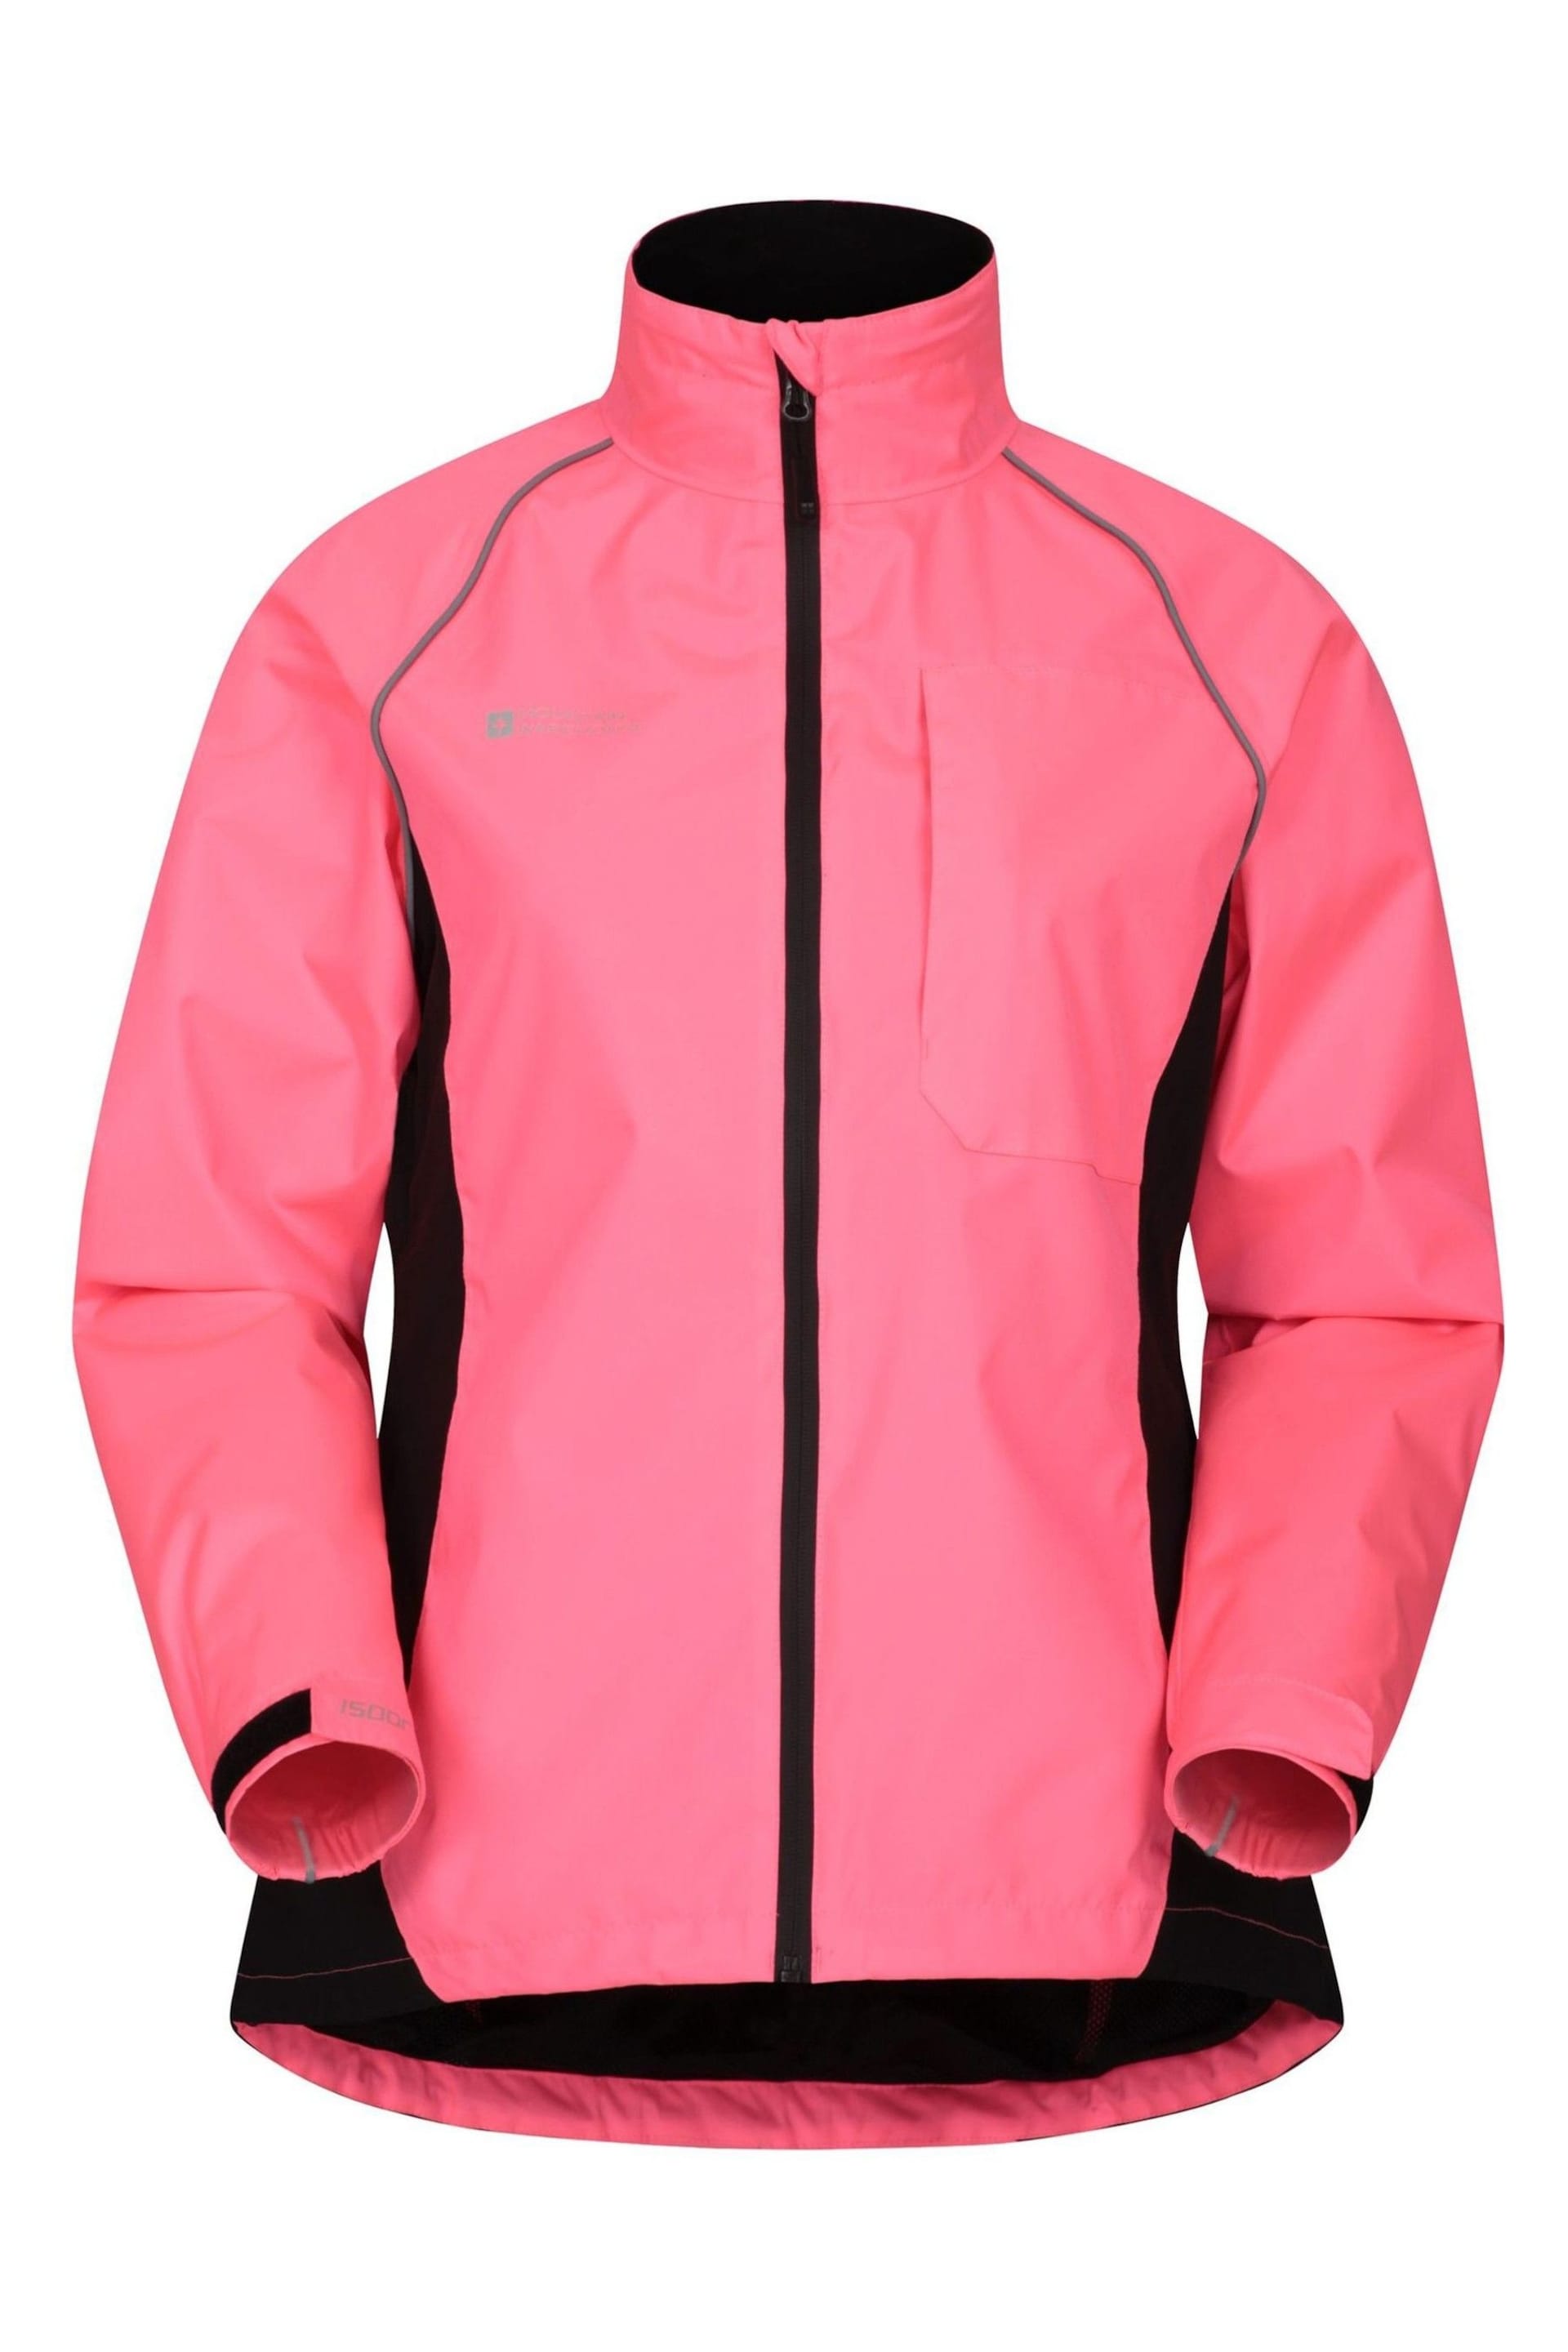 Mountain Warehouse Pink Adrenaline Womens Waterproof Iso-Viz Jacket - Image 1 of 5